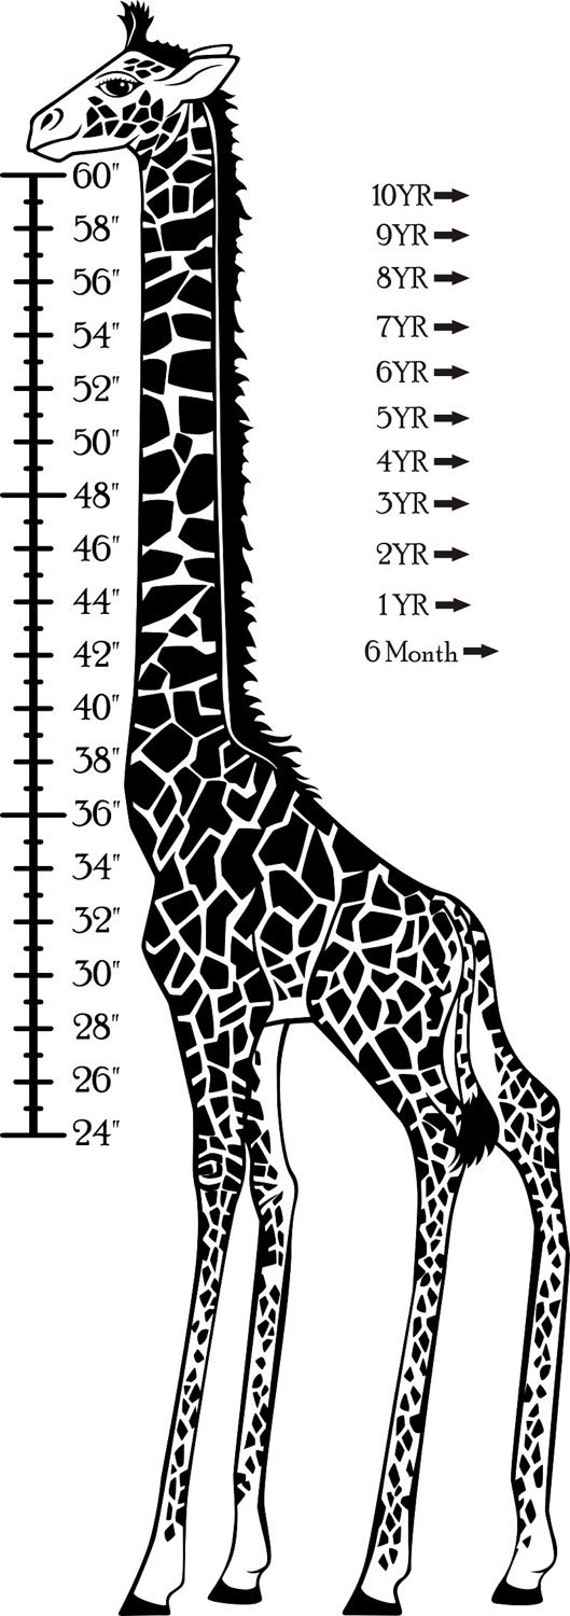 Large Giraffe Growth Chart Kids Wall Height Chart